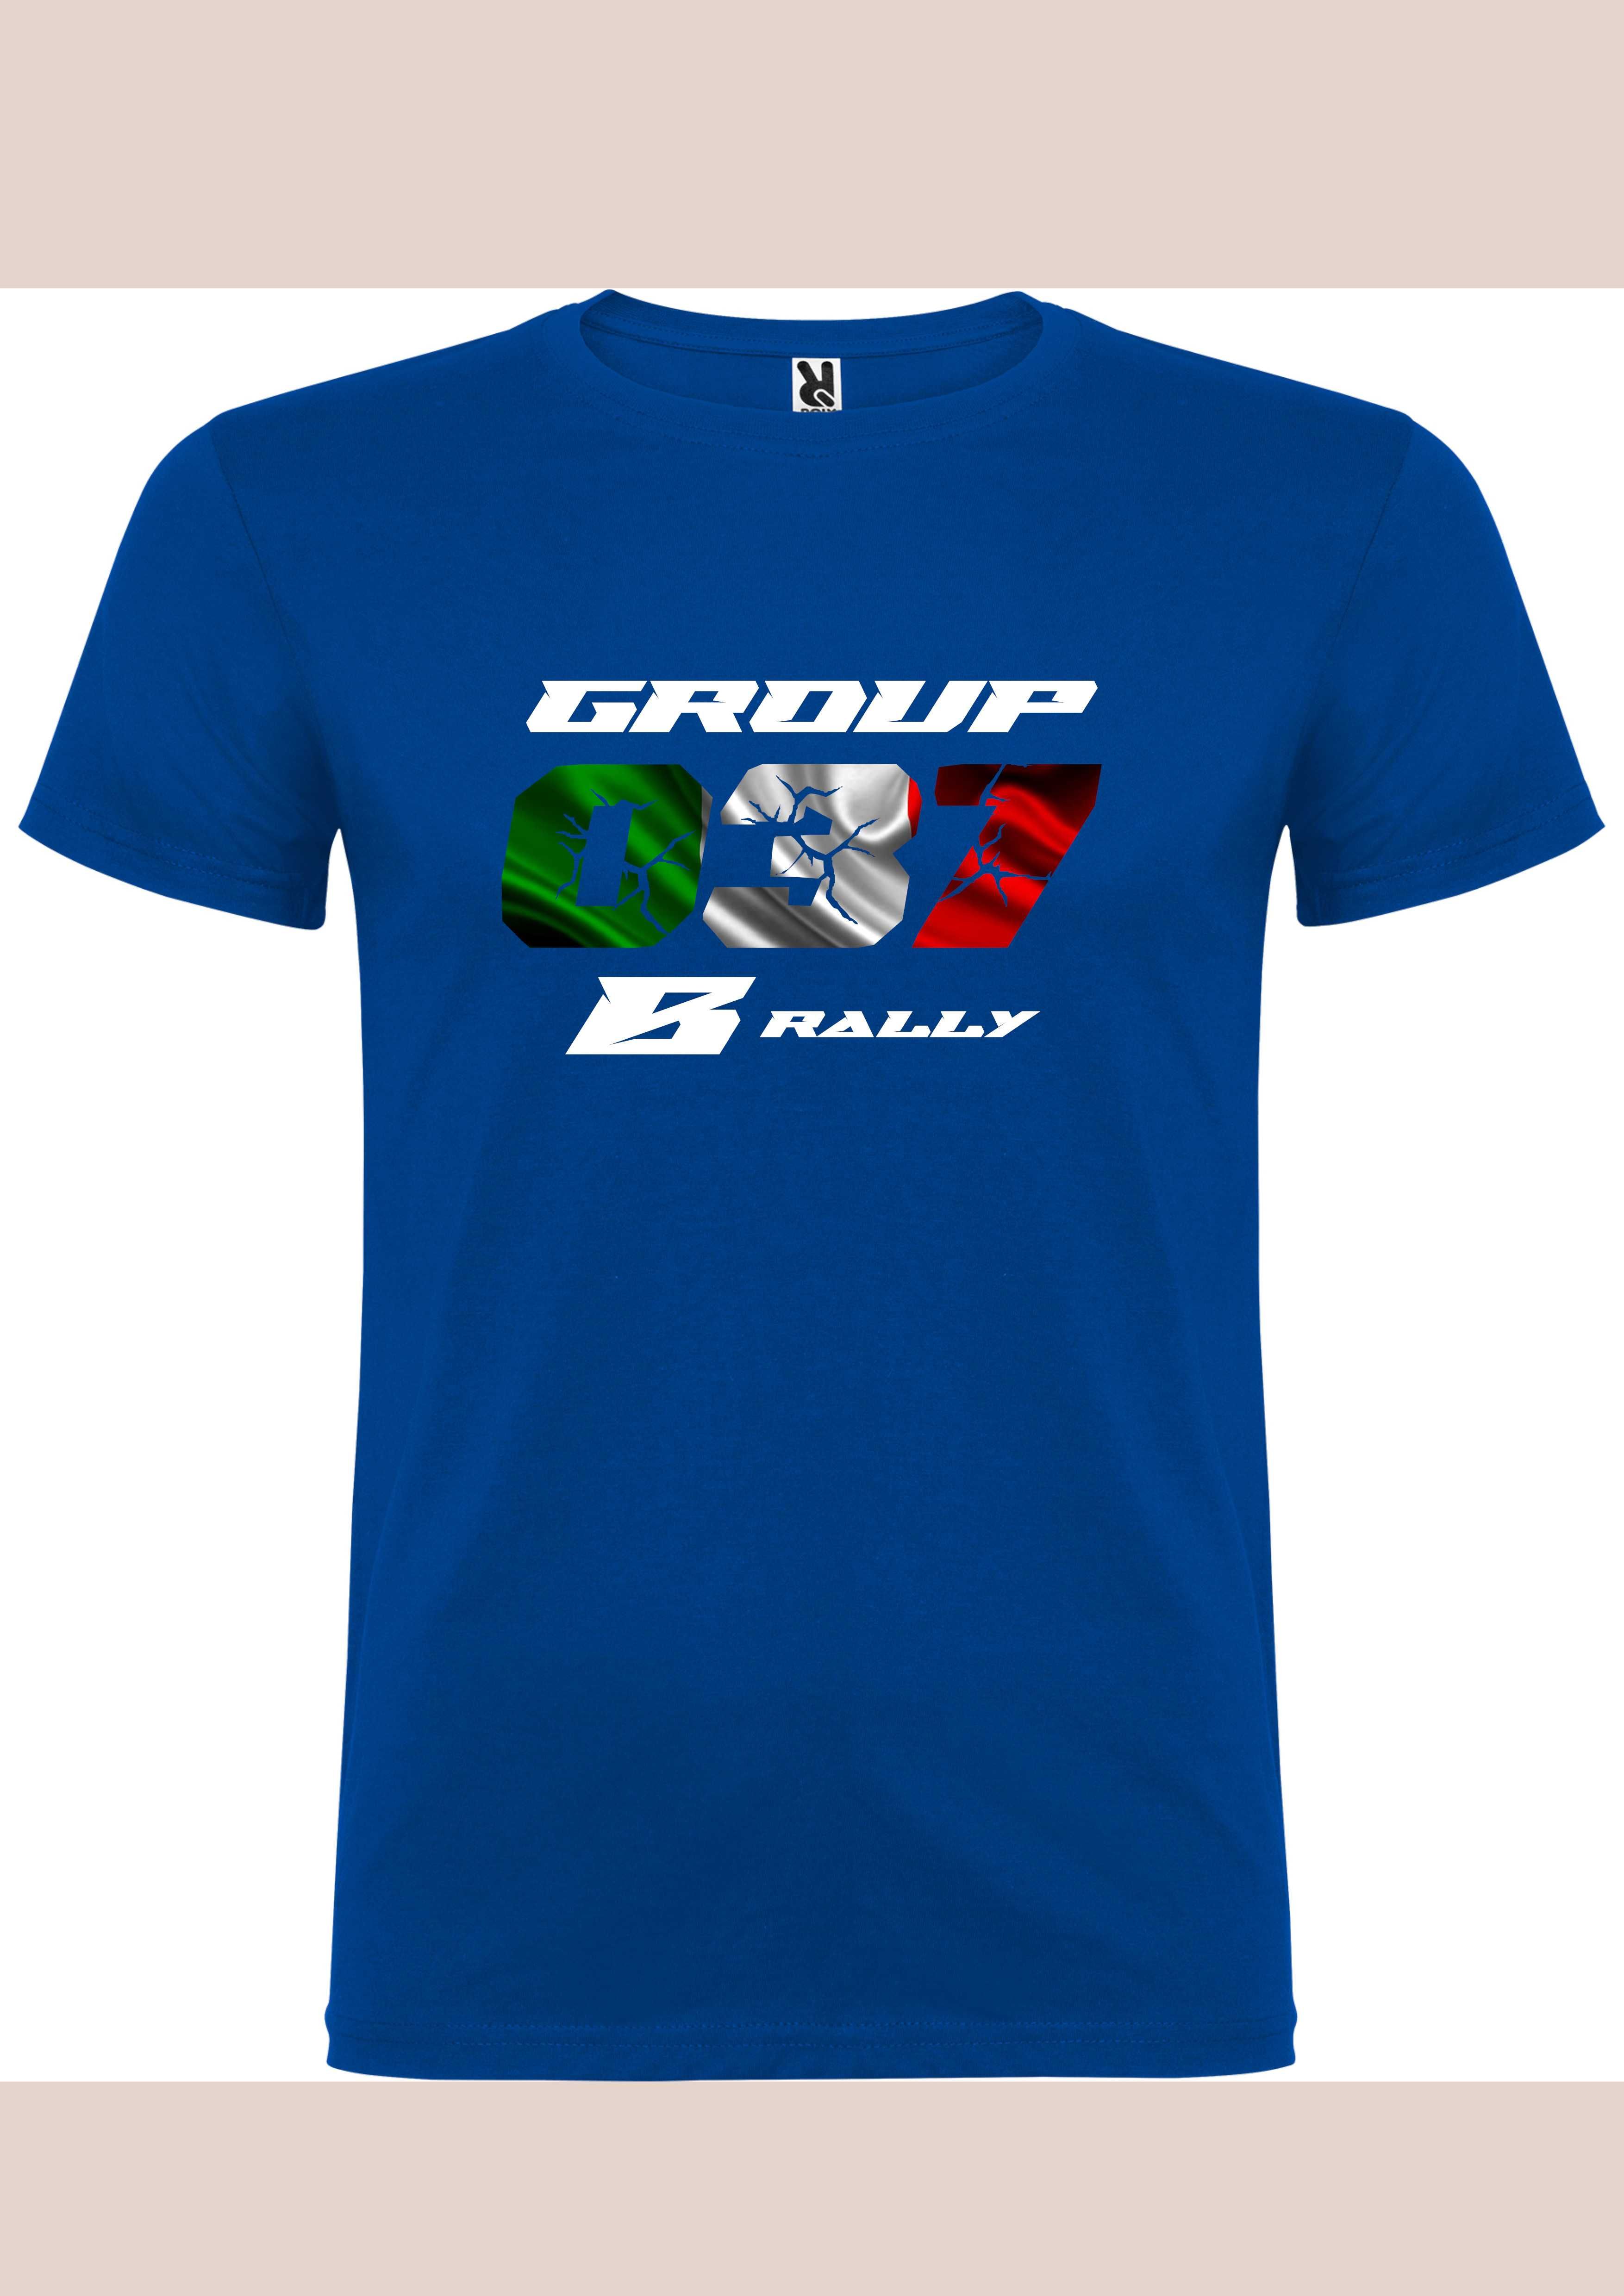 T-shirt Lancia 037 cores bandeira Italia Group B rally